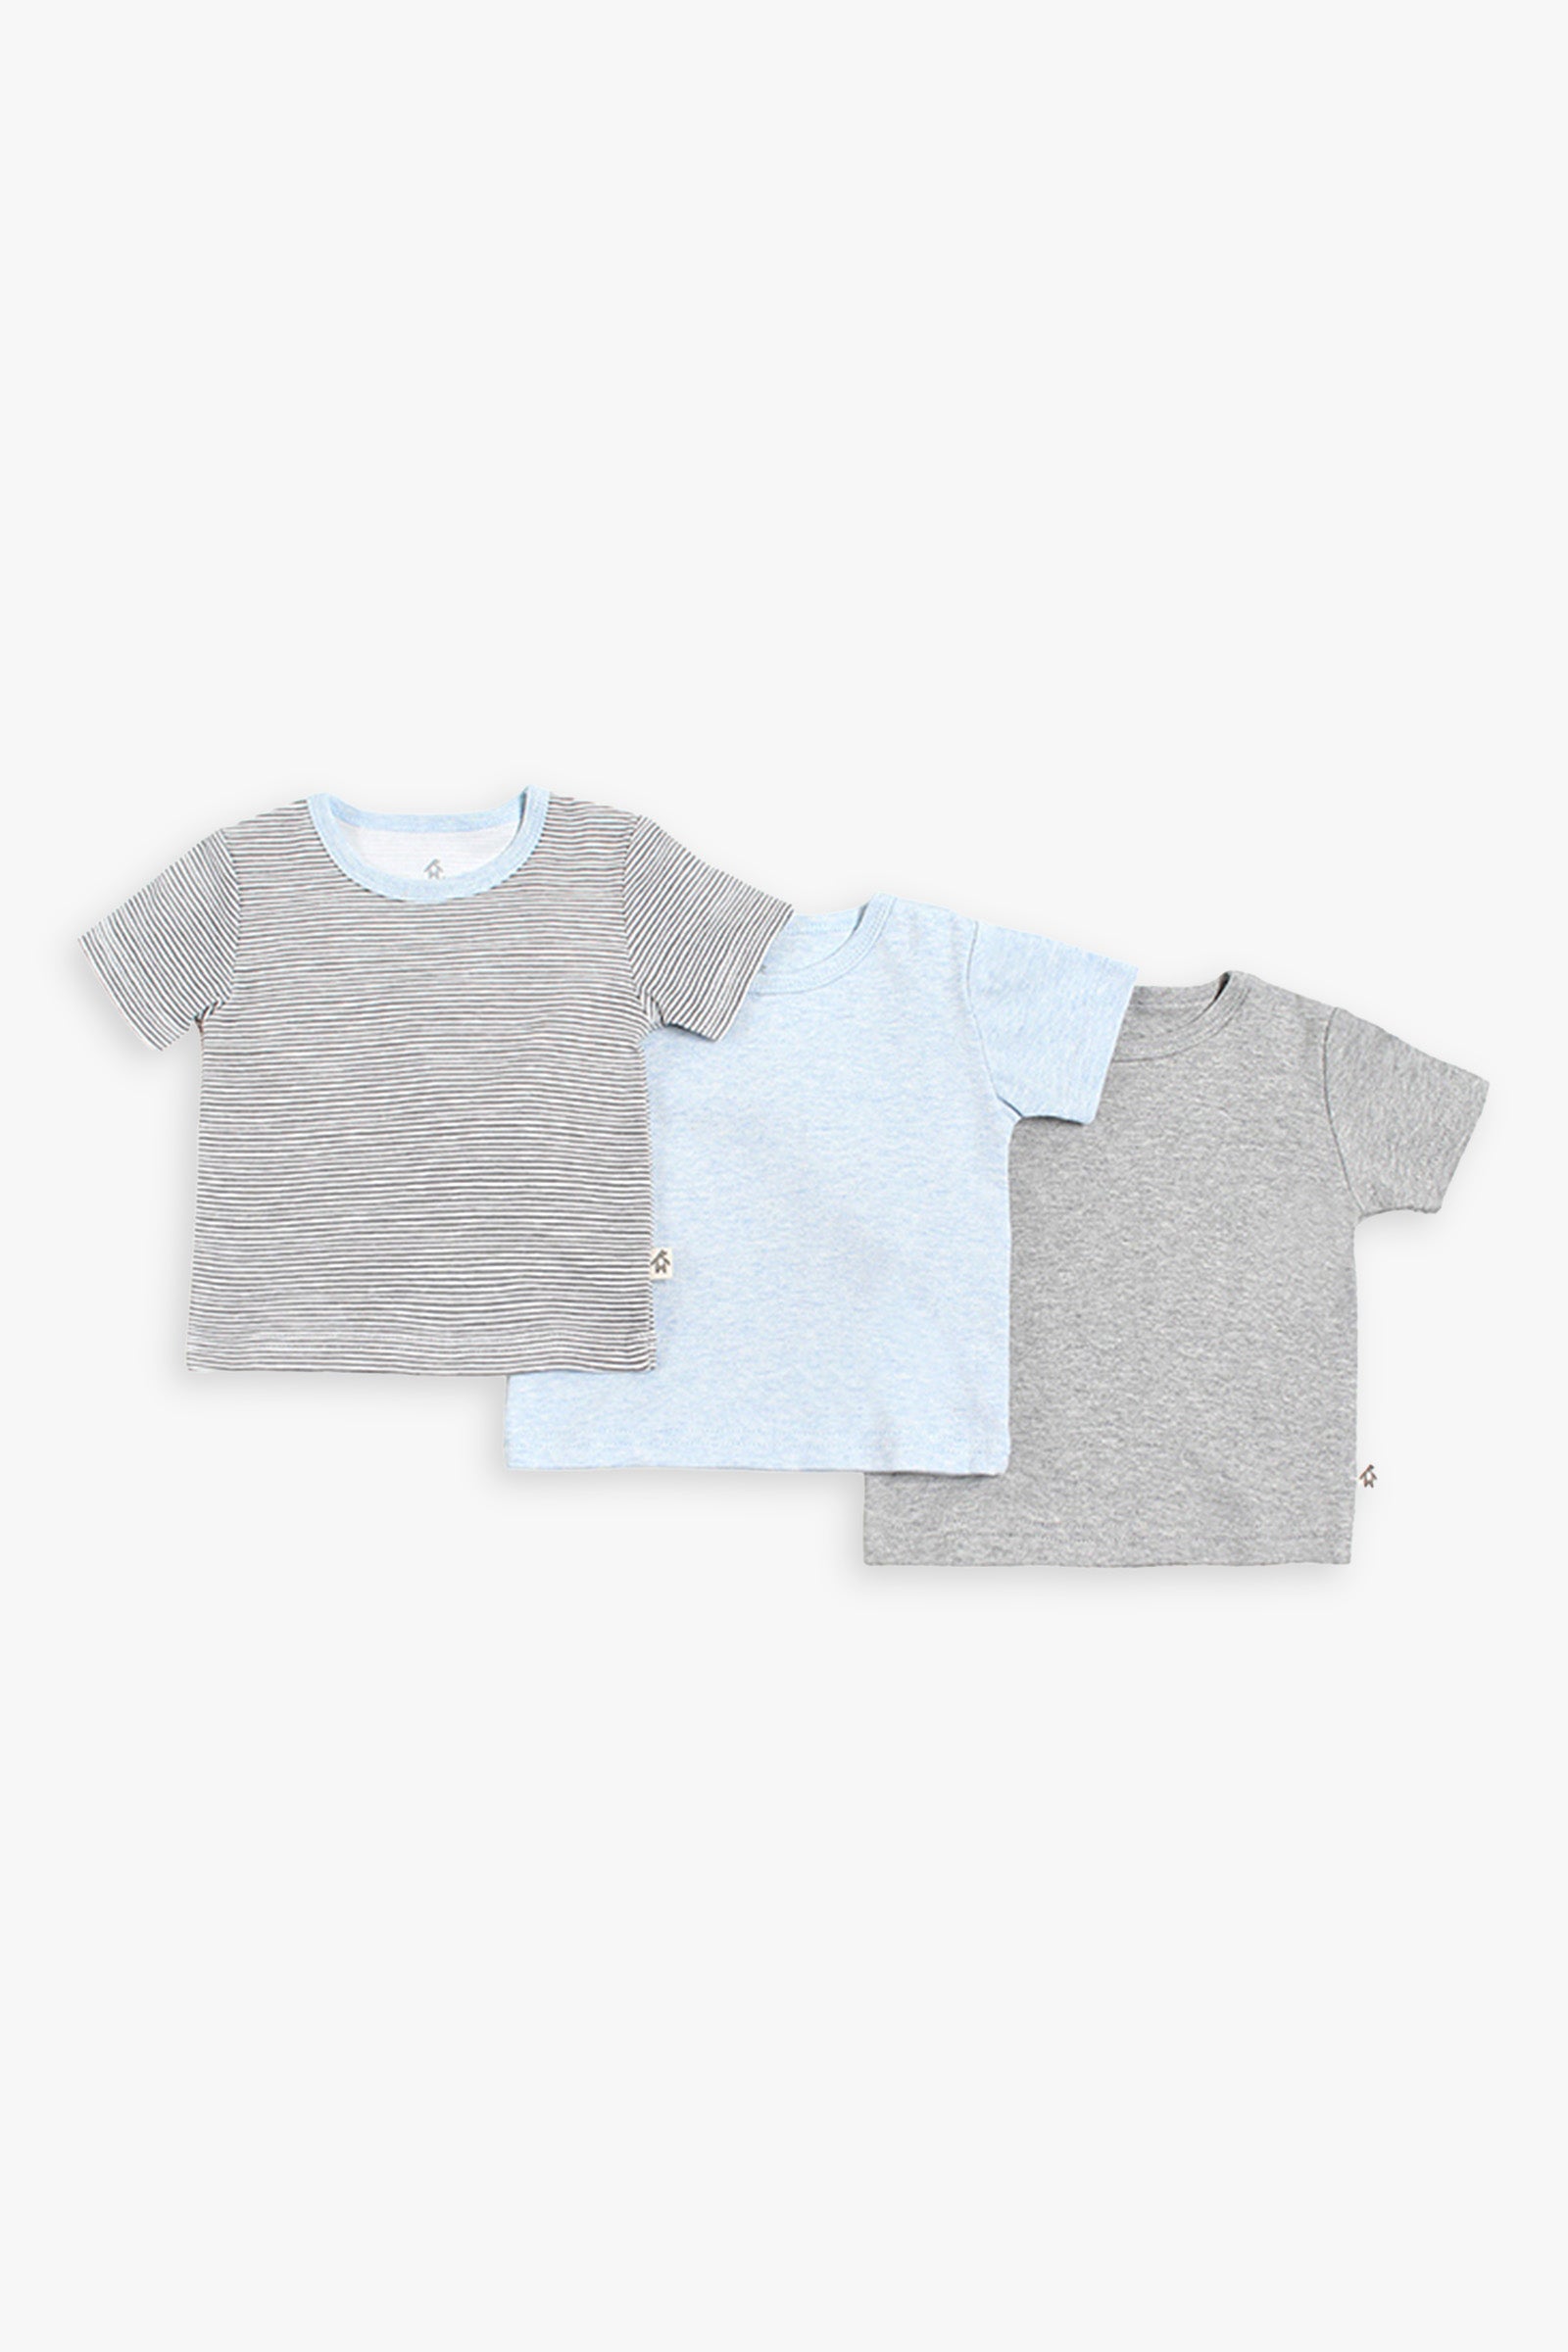 Snugabye Baby Dream 3-Pack Short Sleeve T-Shirts